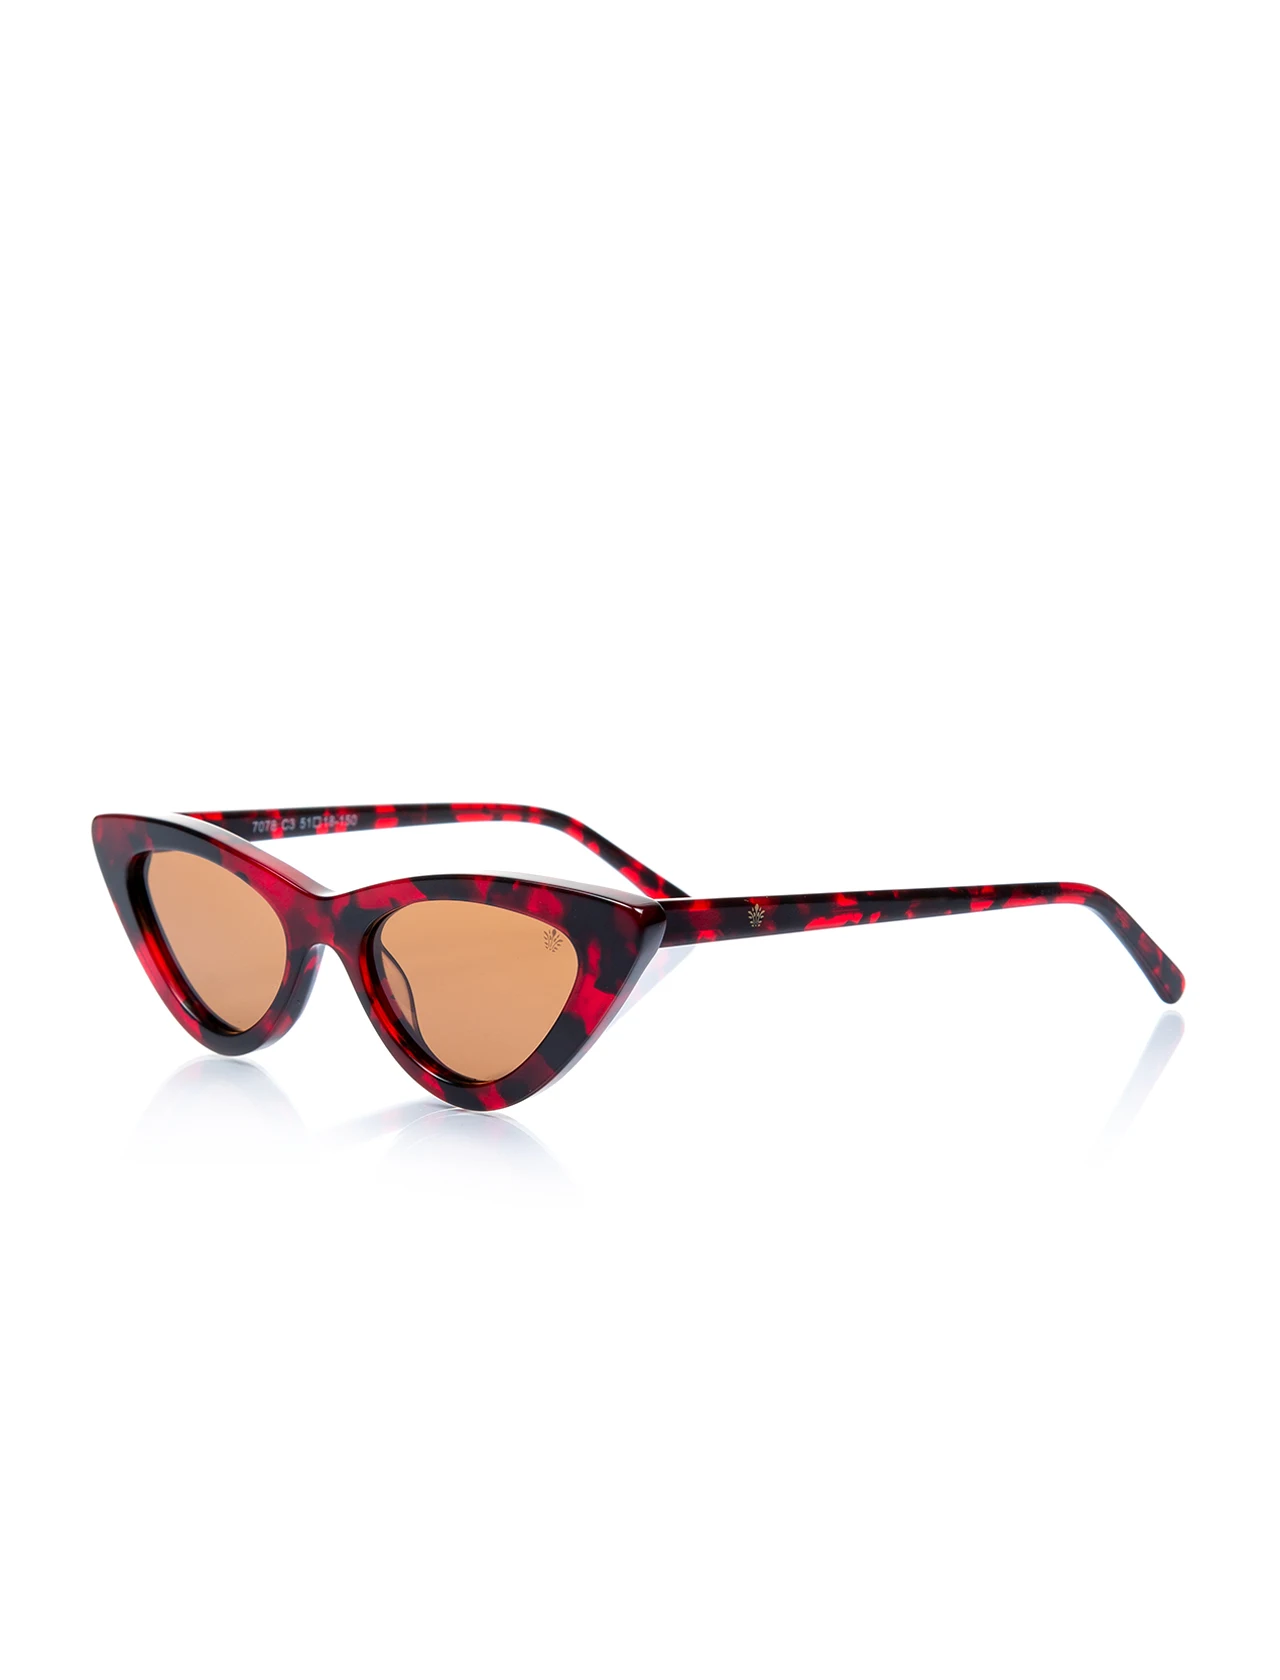 

Women's sunglasses ldy 7078 03 bone Burgundy organic geometric cat eye 51-18-150 lady victoria